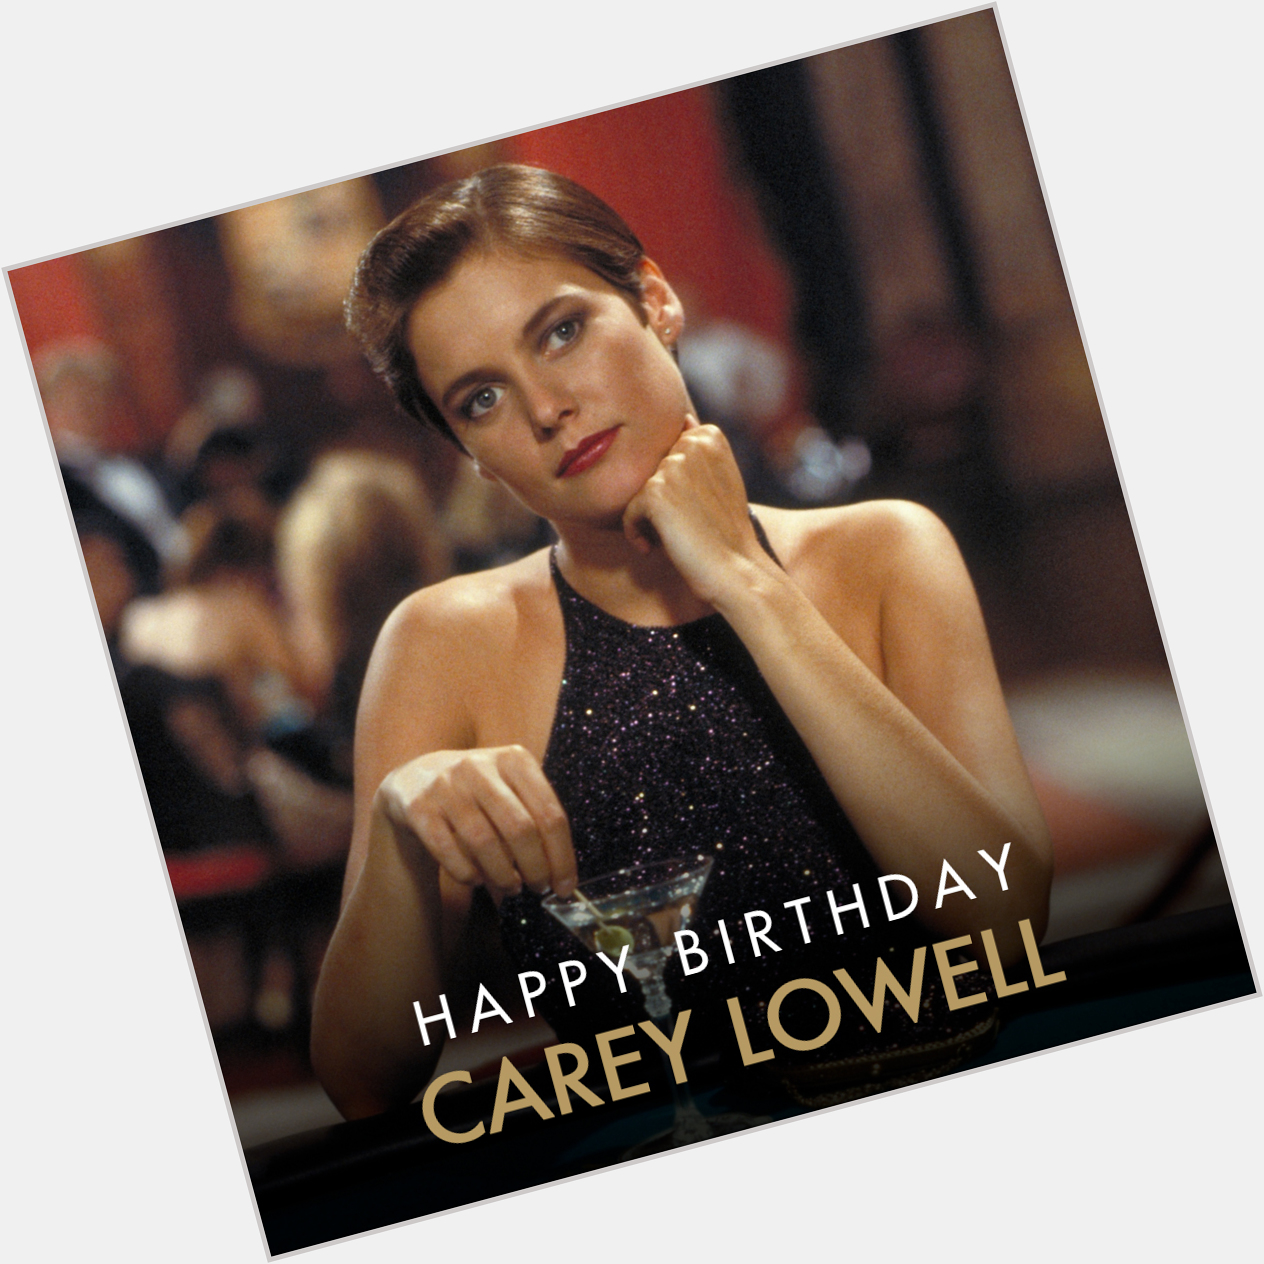 Happy birthday to Carey Lowell aka Pam Bouvier in LICENCE TO KILL. 